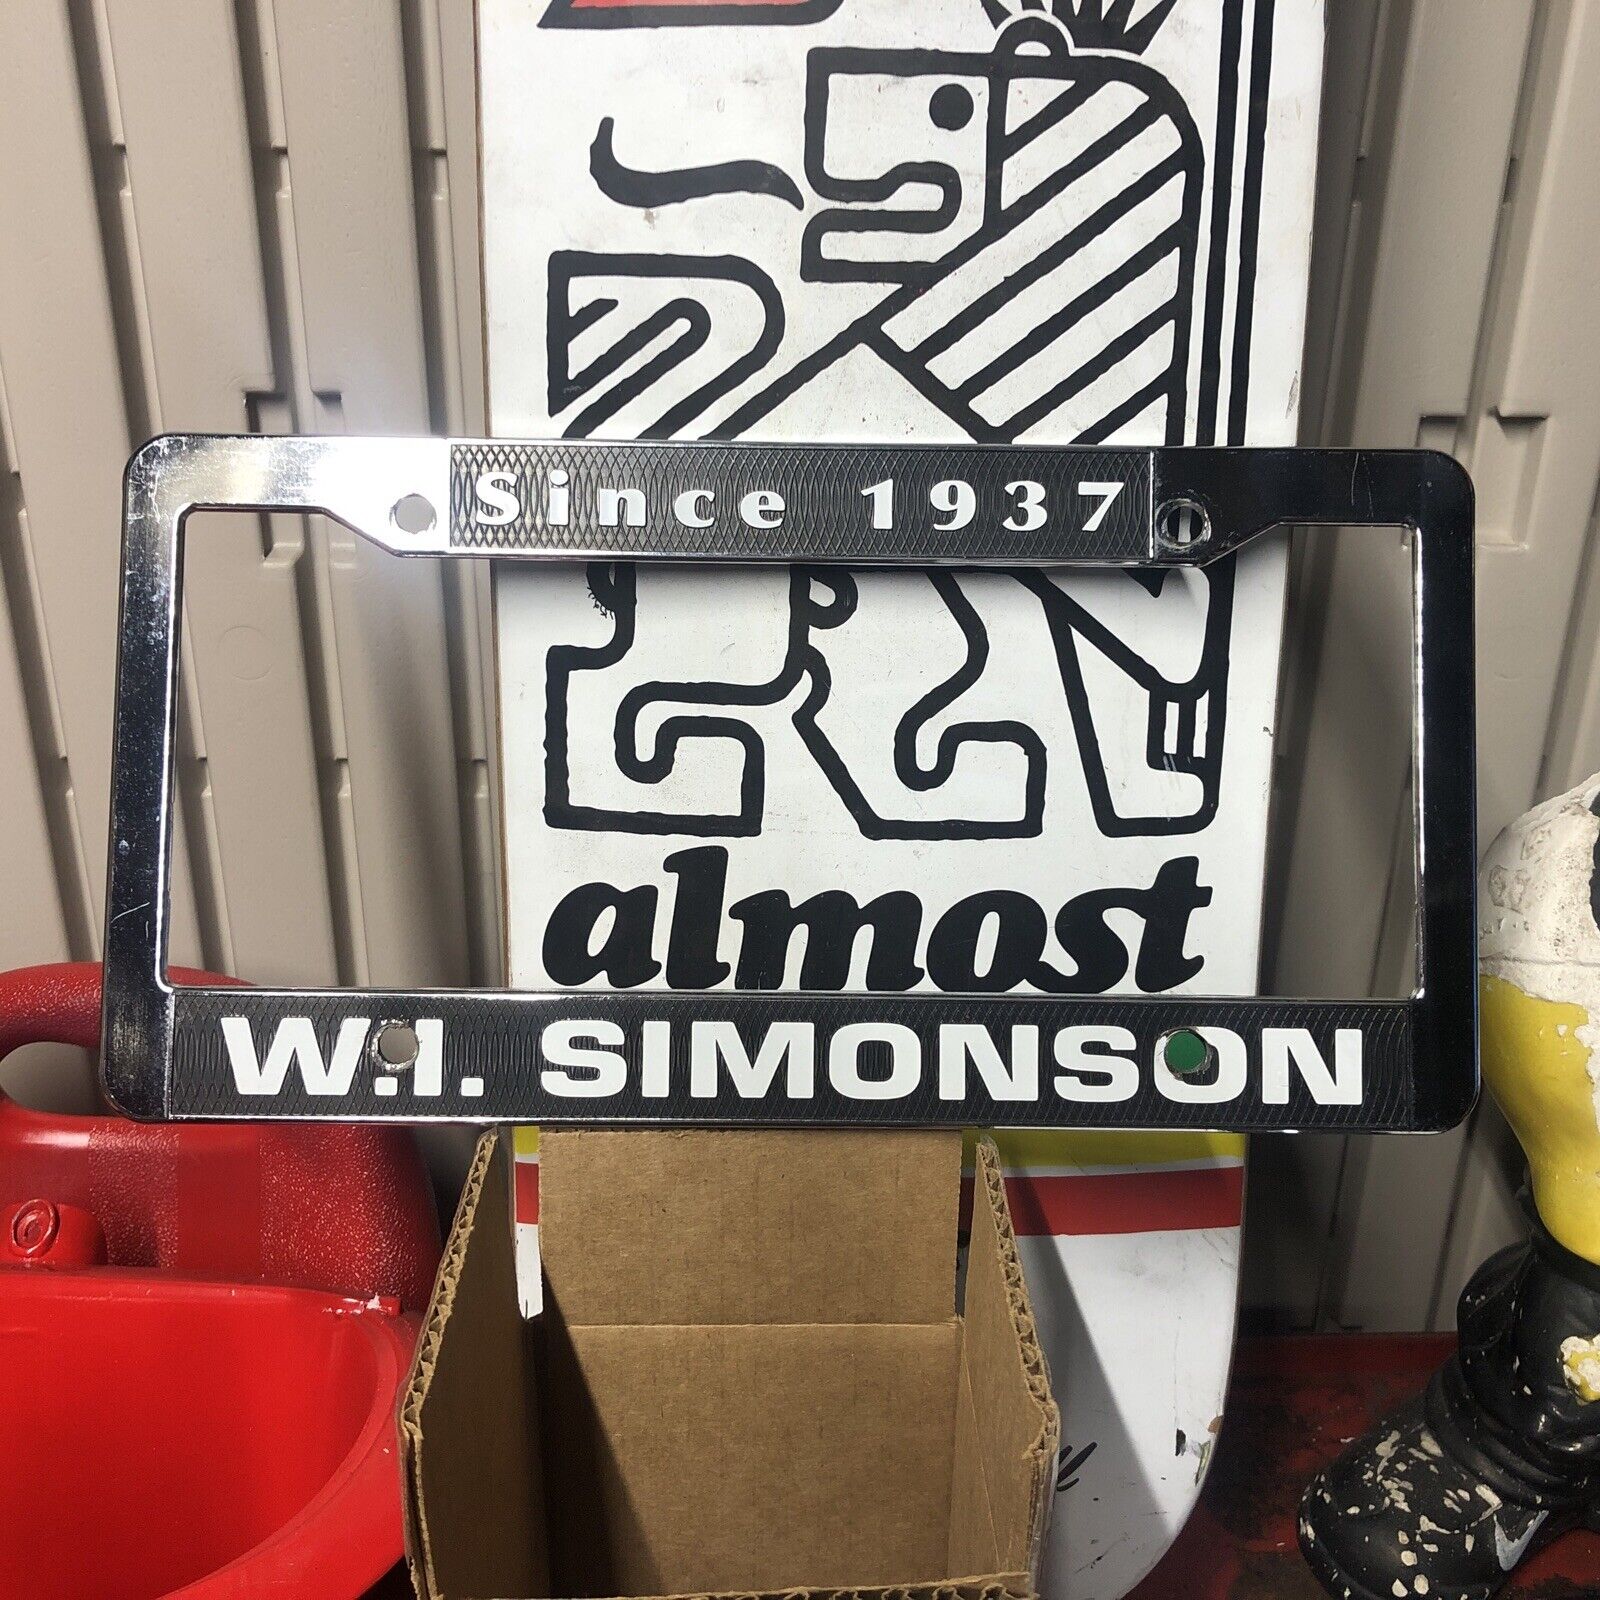 1 Since Rare 1937 W.I. Simonson Mercedes Benz Dealer License Plate Plastic